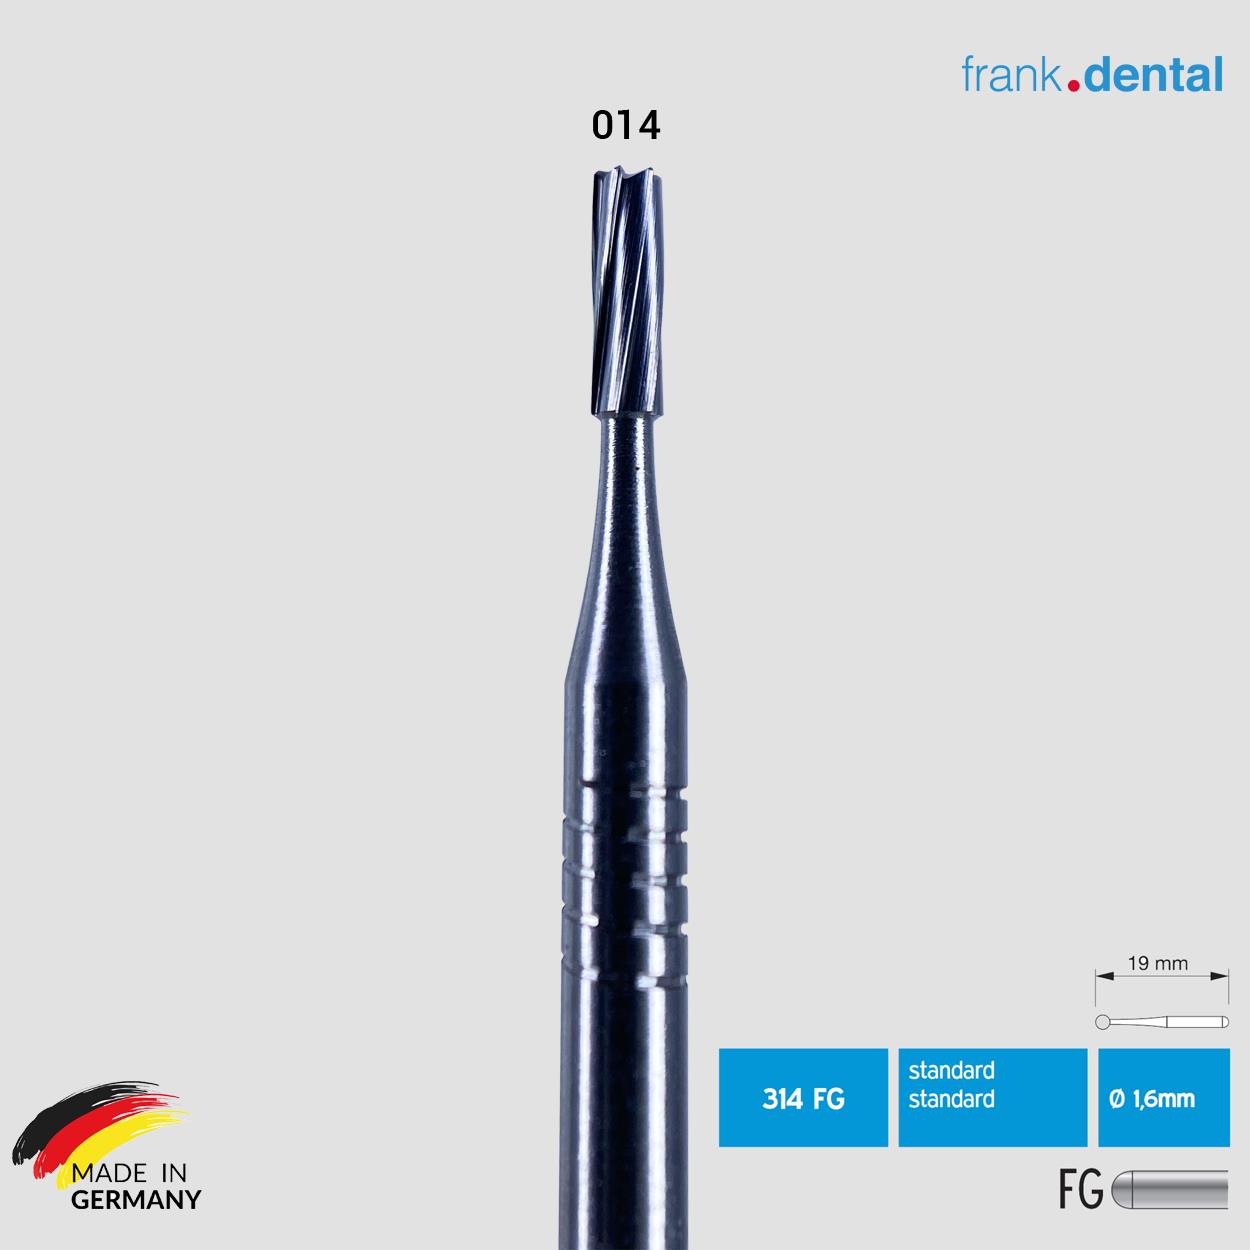 DentrealStore - Frank Dental Tungsten Carpide Bur C.21FG - for Air Turbine - 5 Pcs